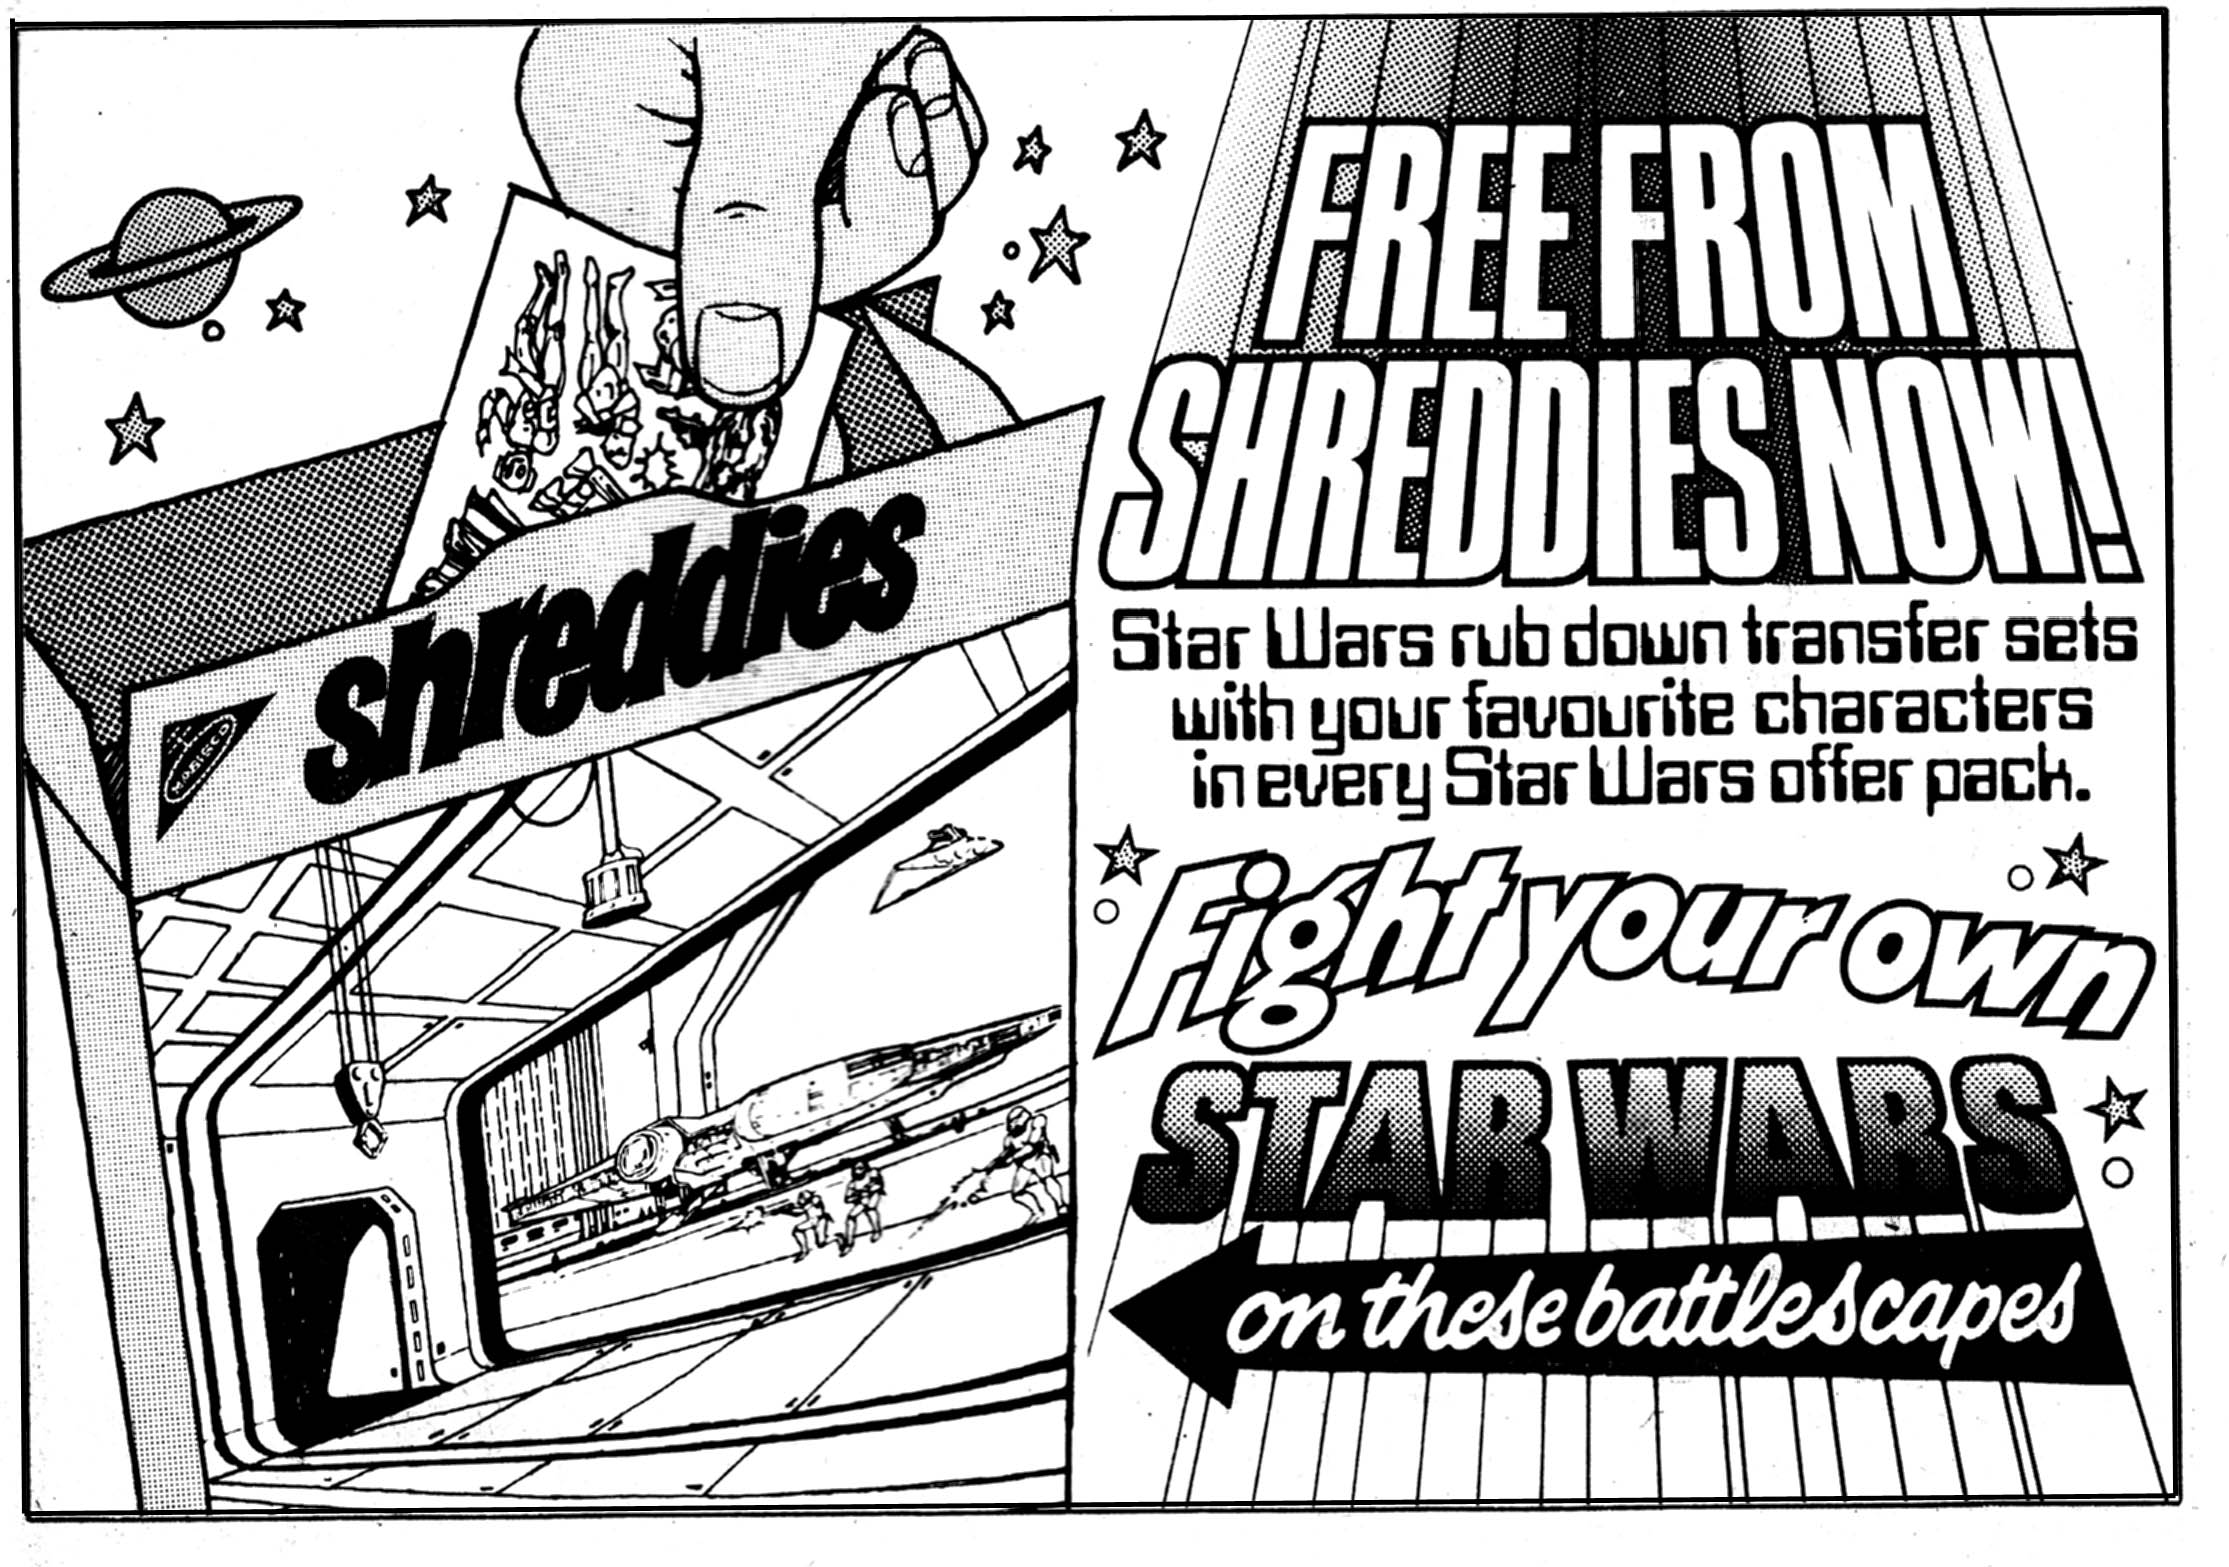 1978 Shreddies Star Wars Transfers